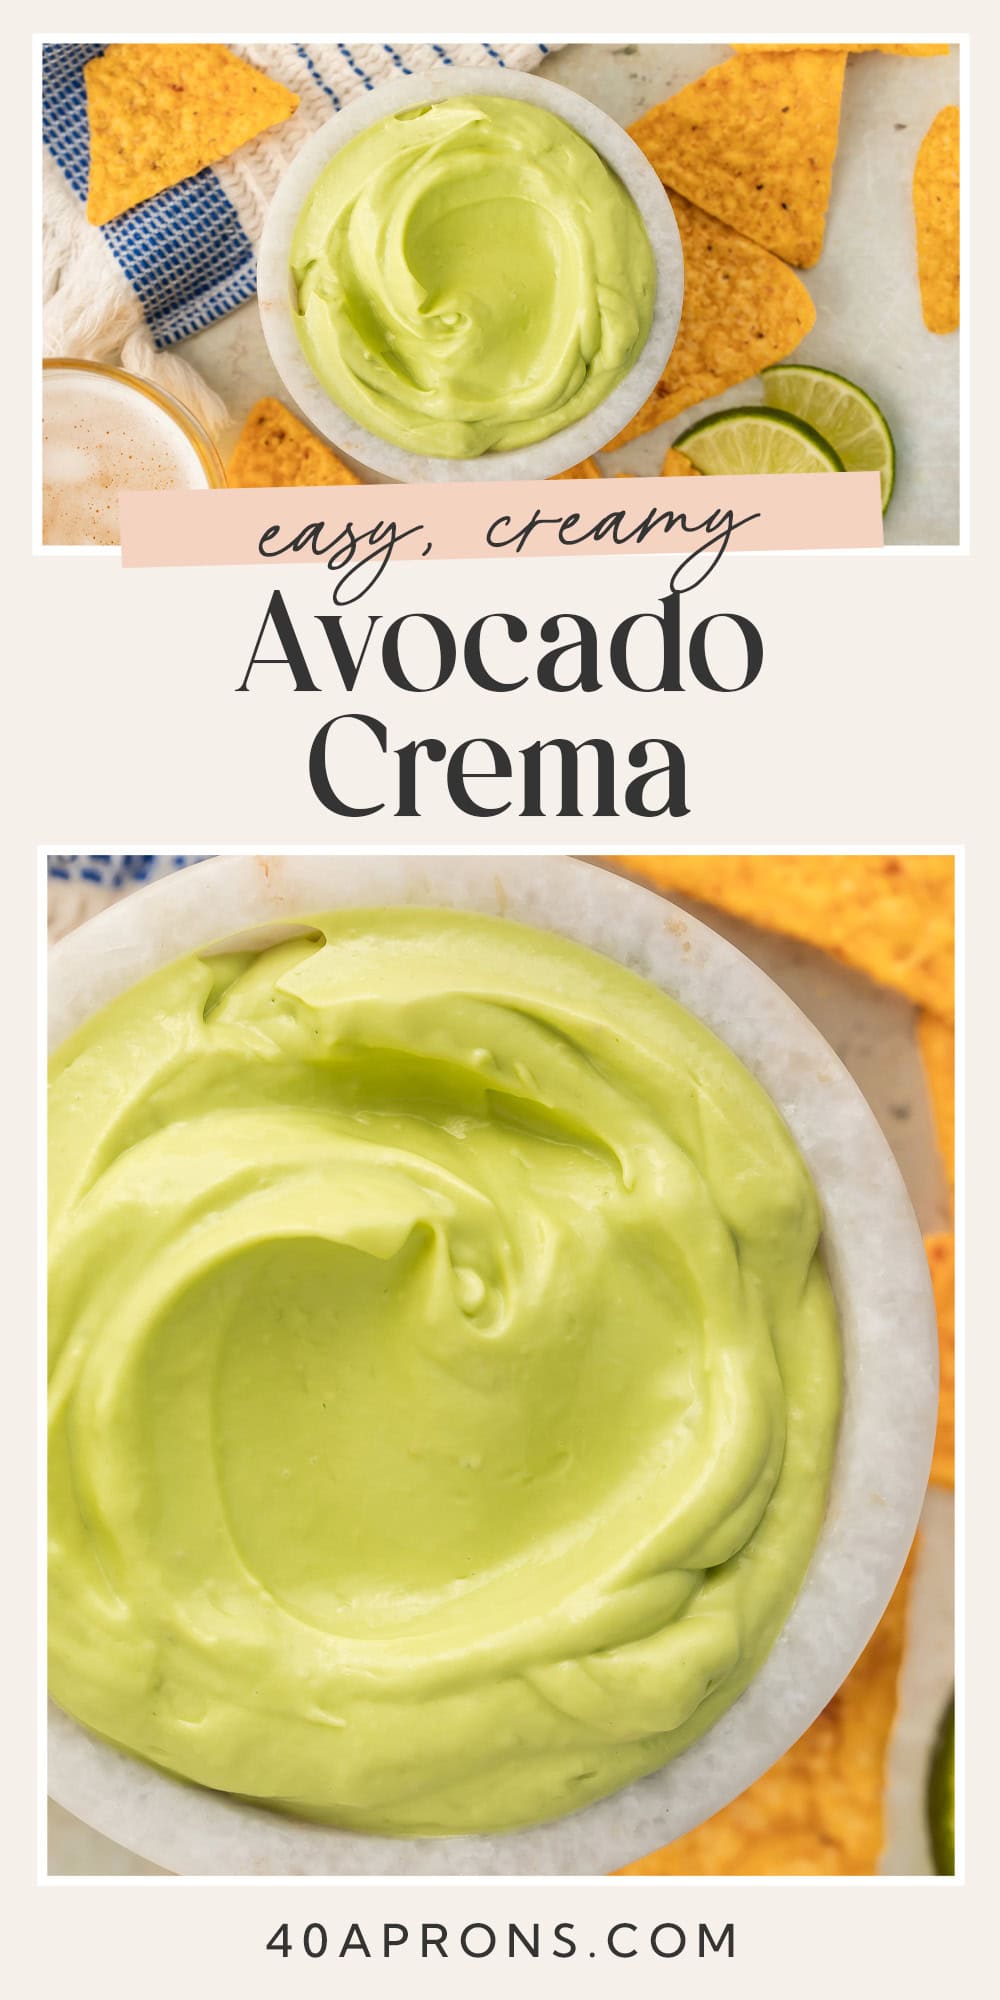 Pin graphic for avocado crema.